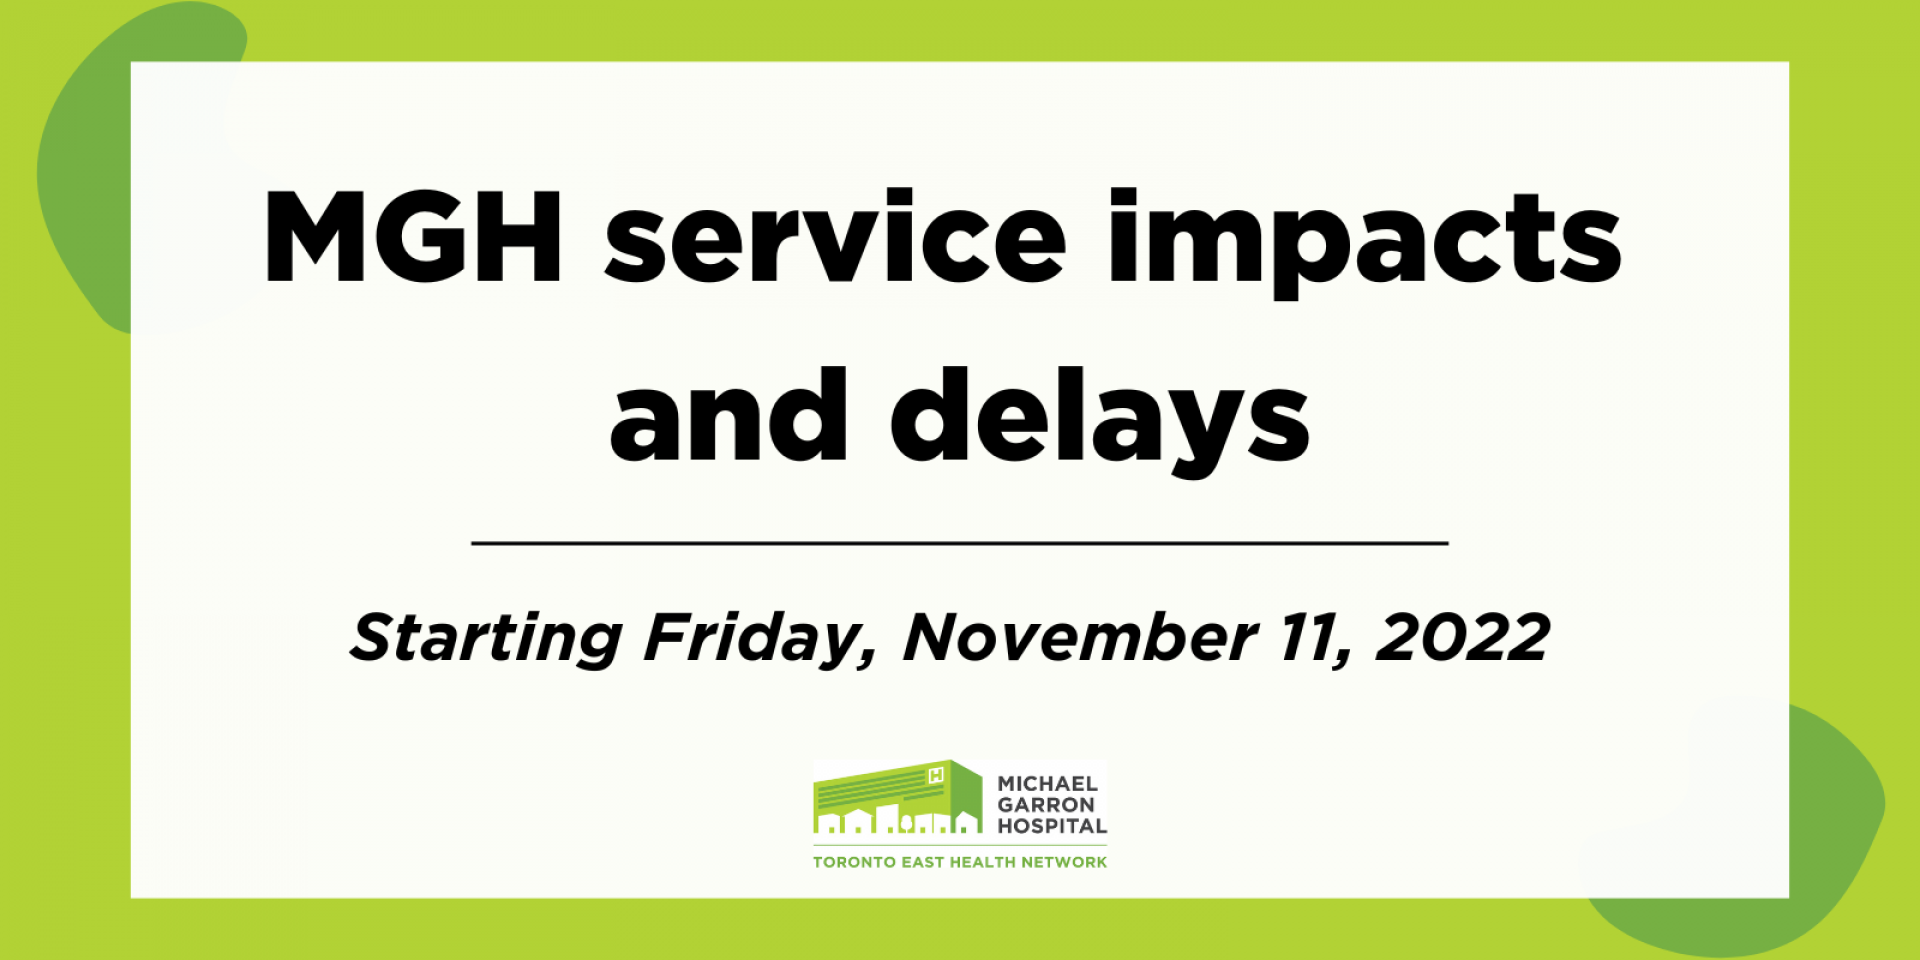 MGH service impacts and delays starting Friday, November 11, 2022